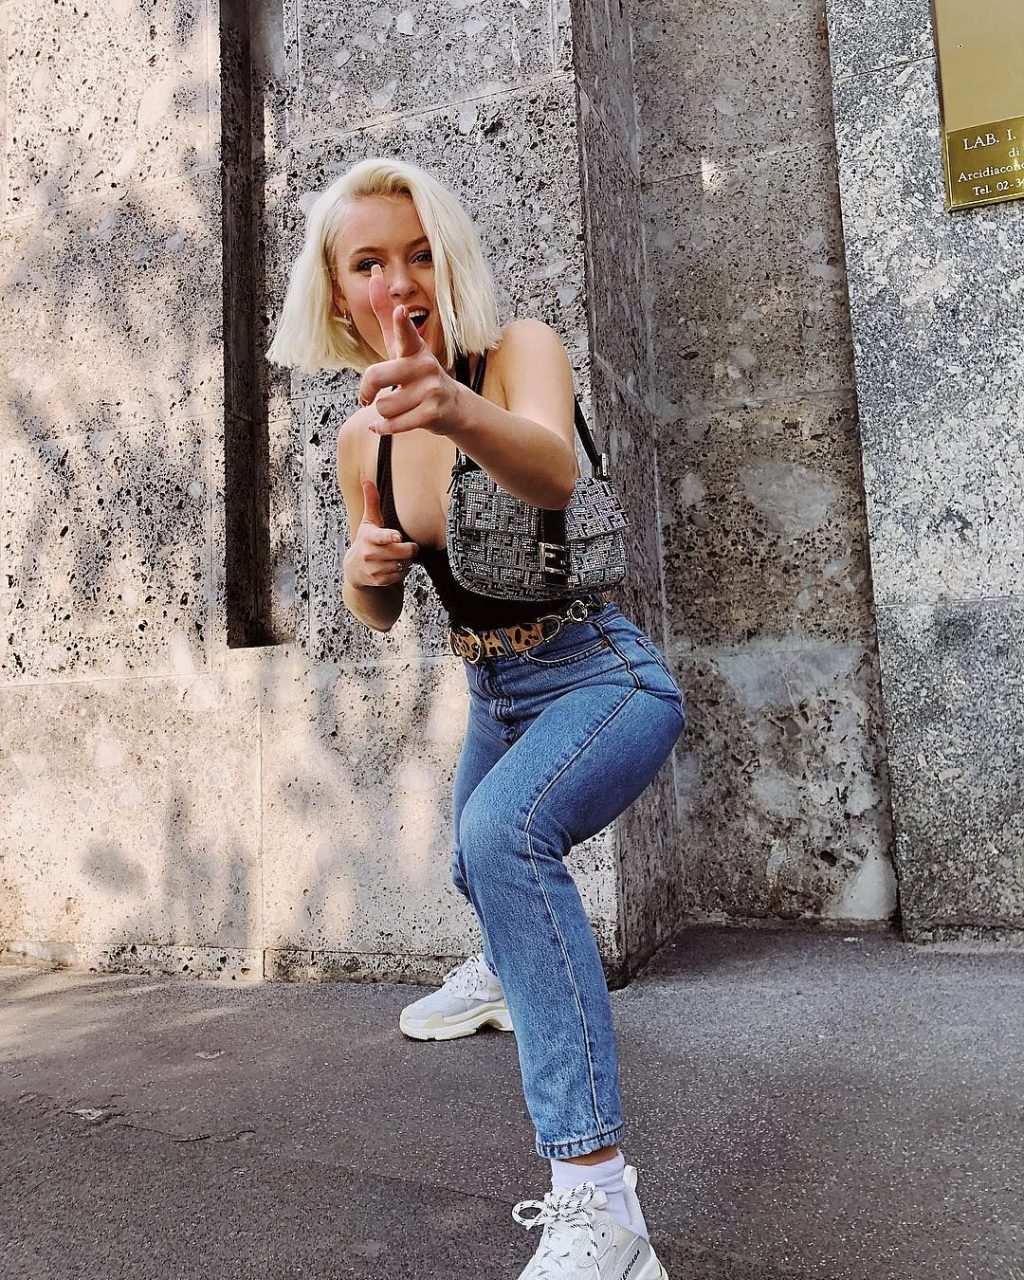 Zara Larsson Sexy (165 Photos)